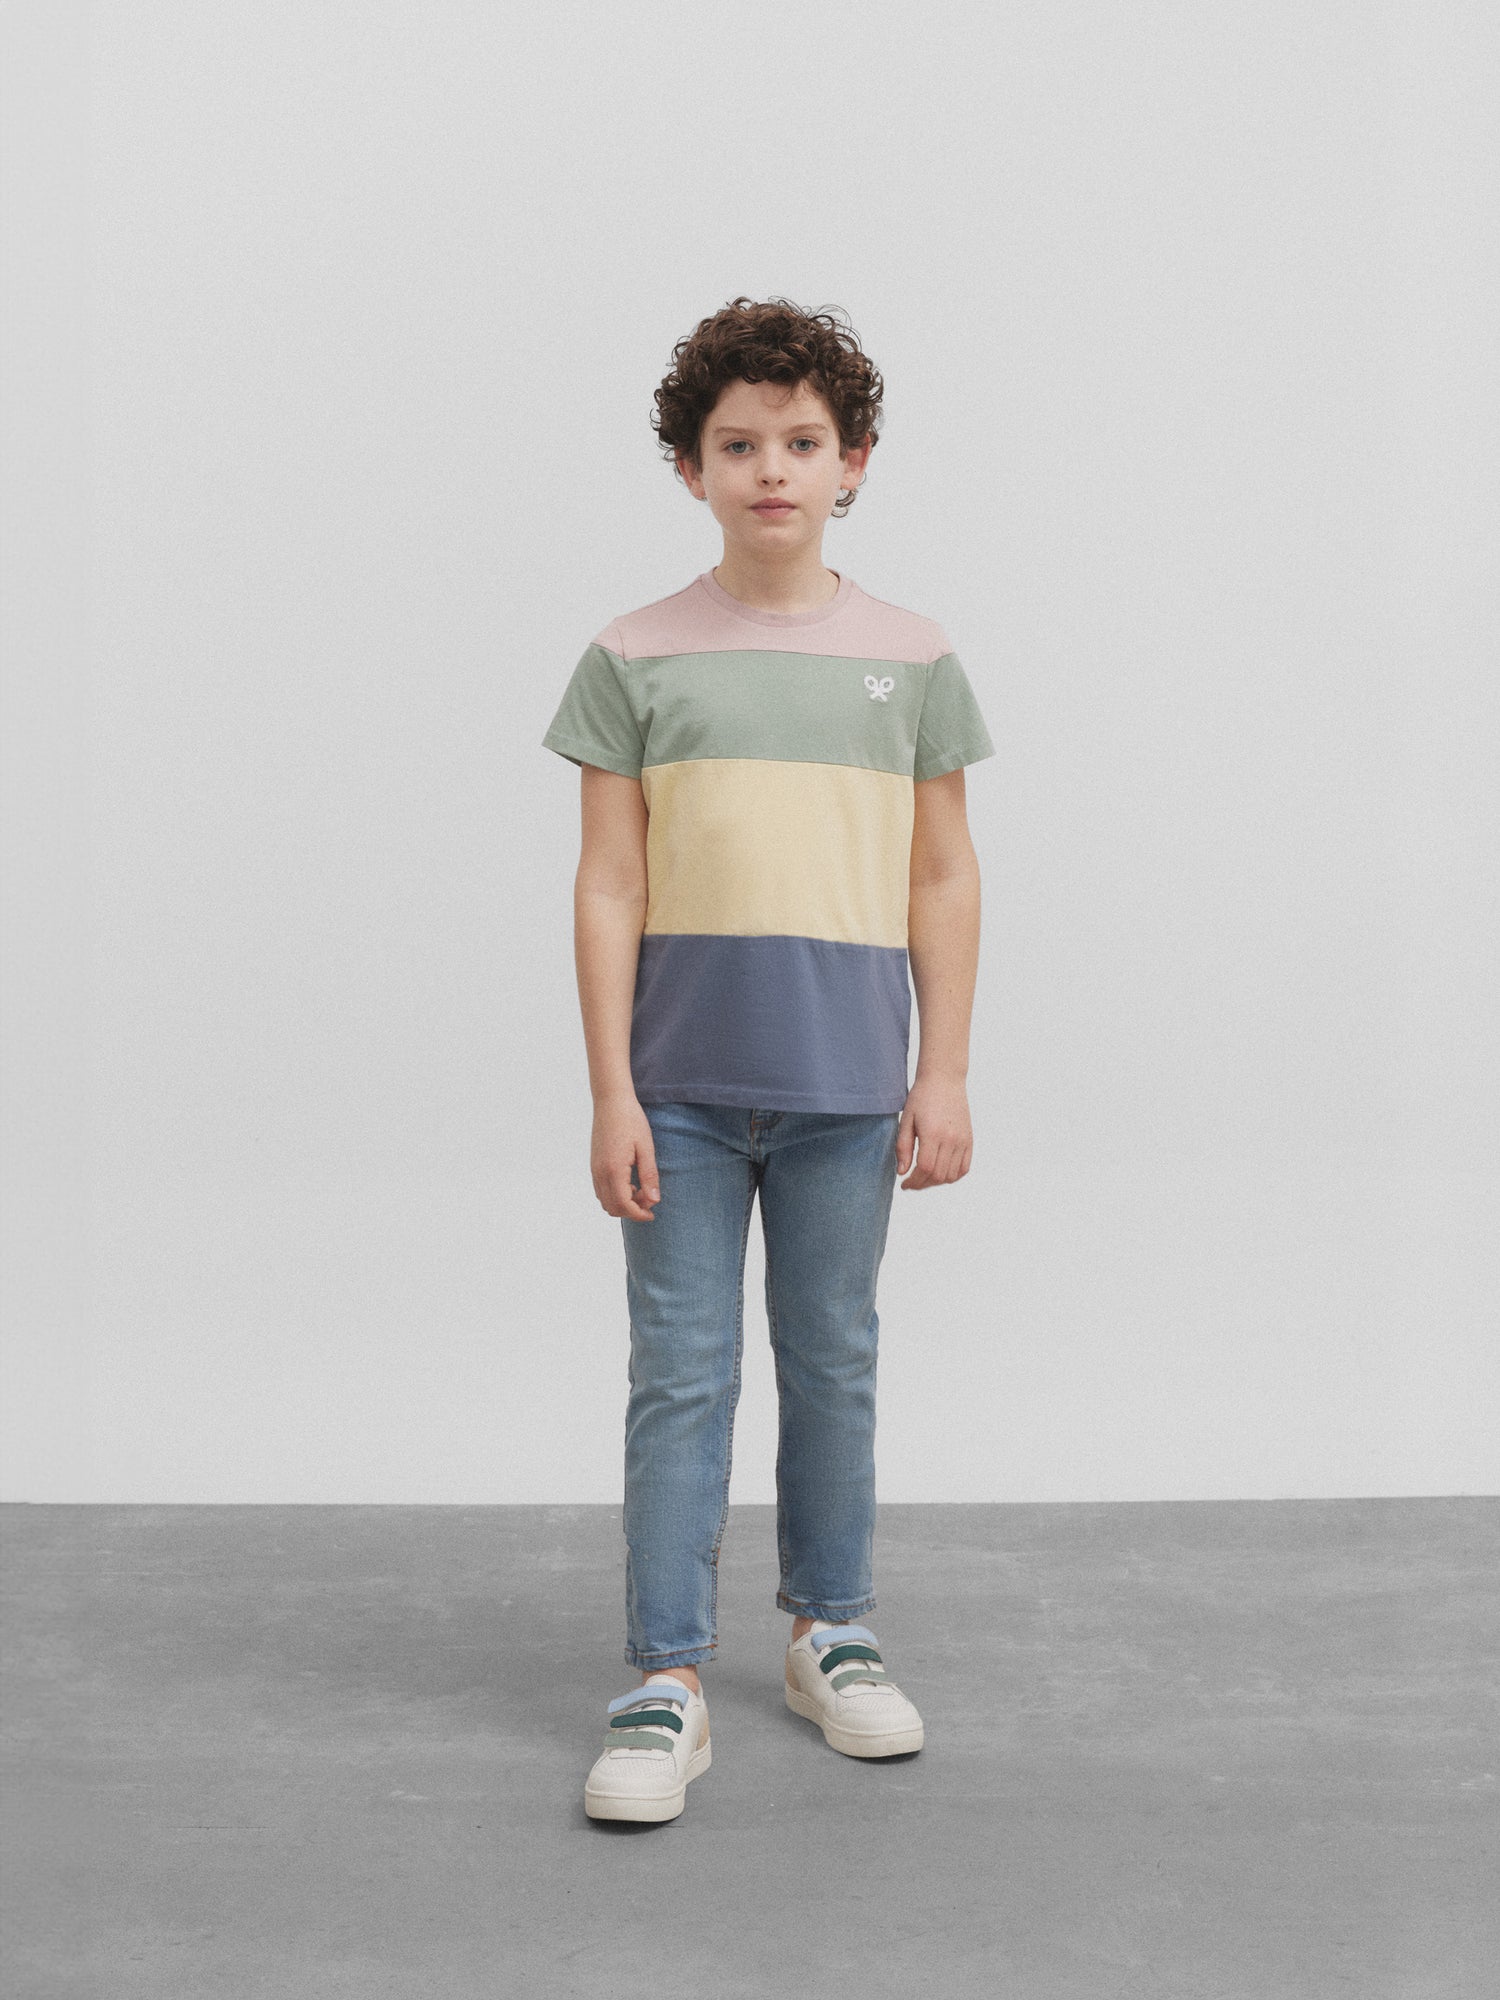 Yellow wide striped kids t-shirt